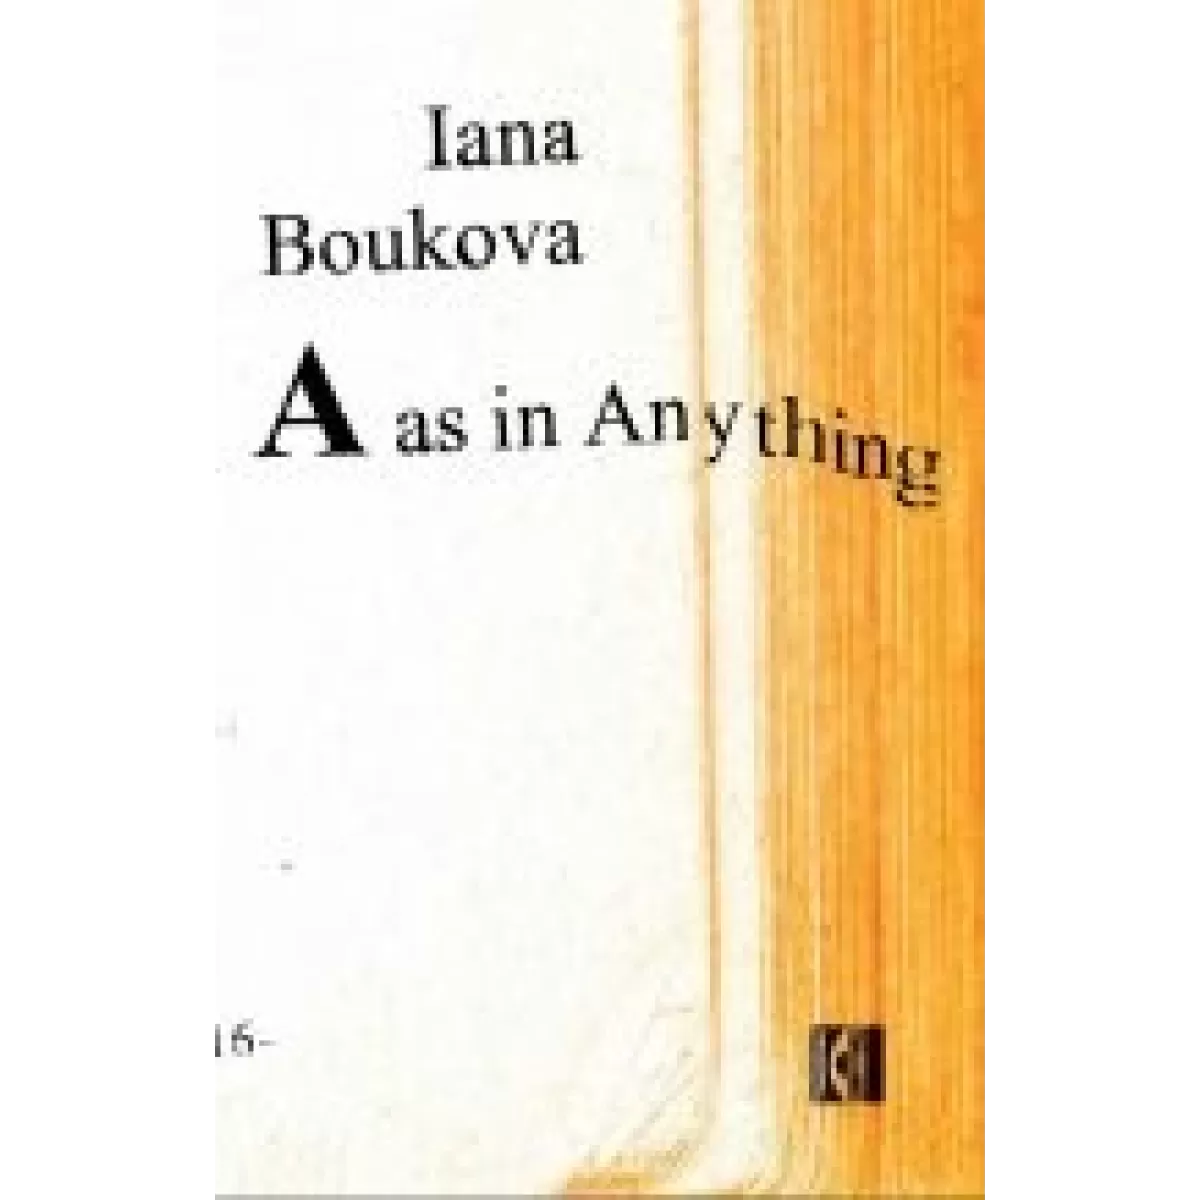 A as in Anything - Iana Boukova